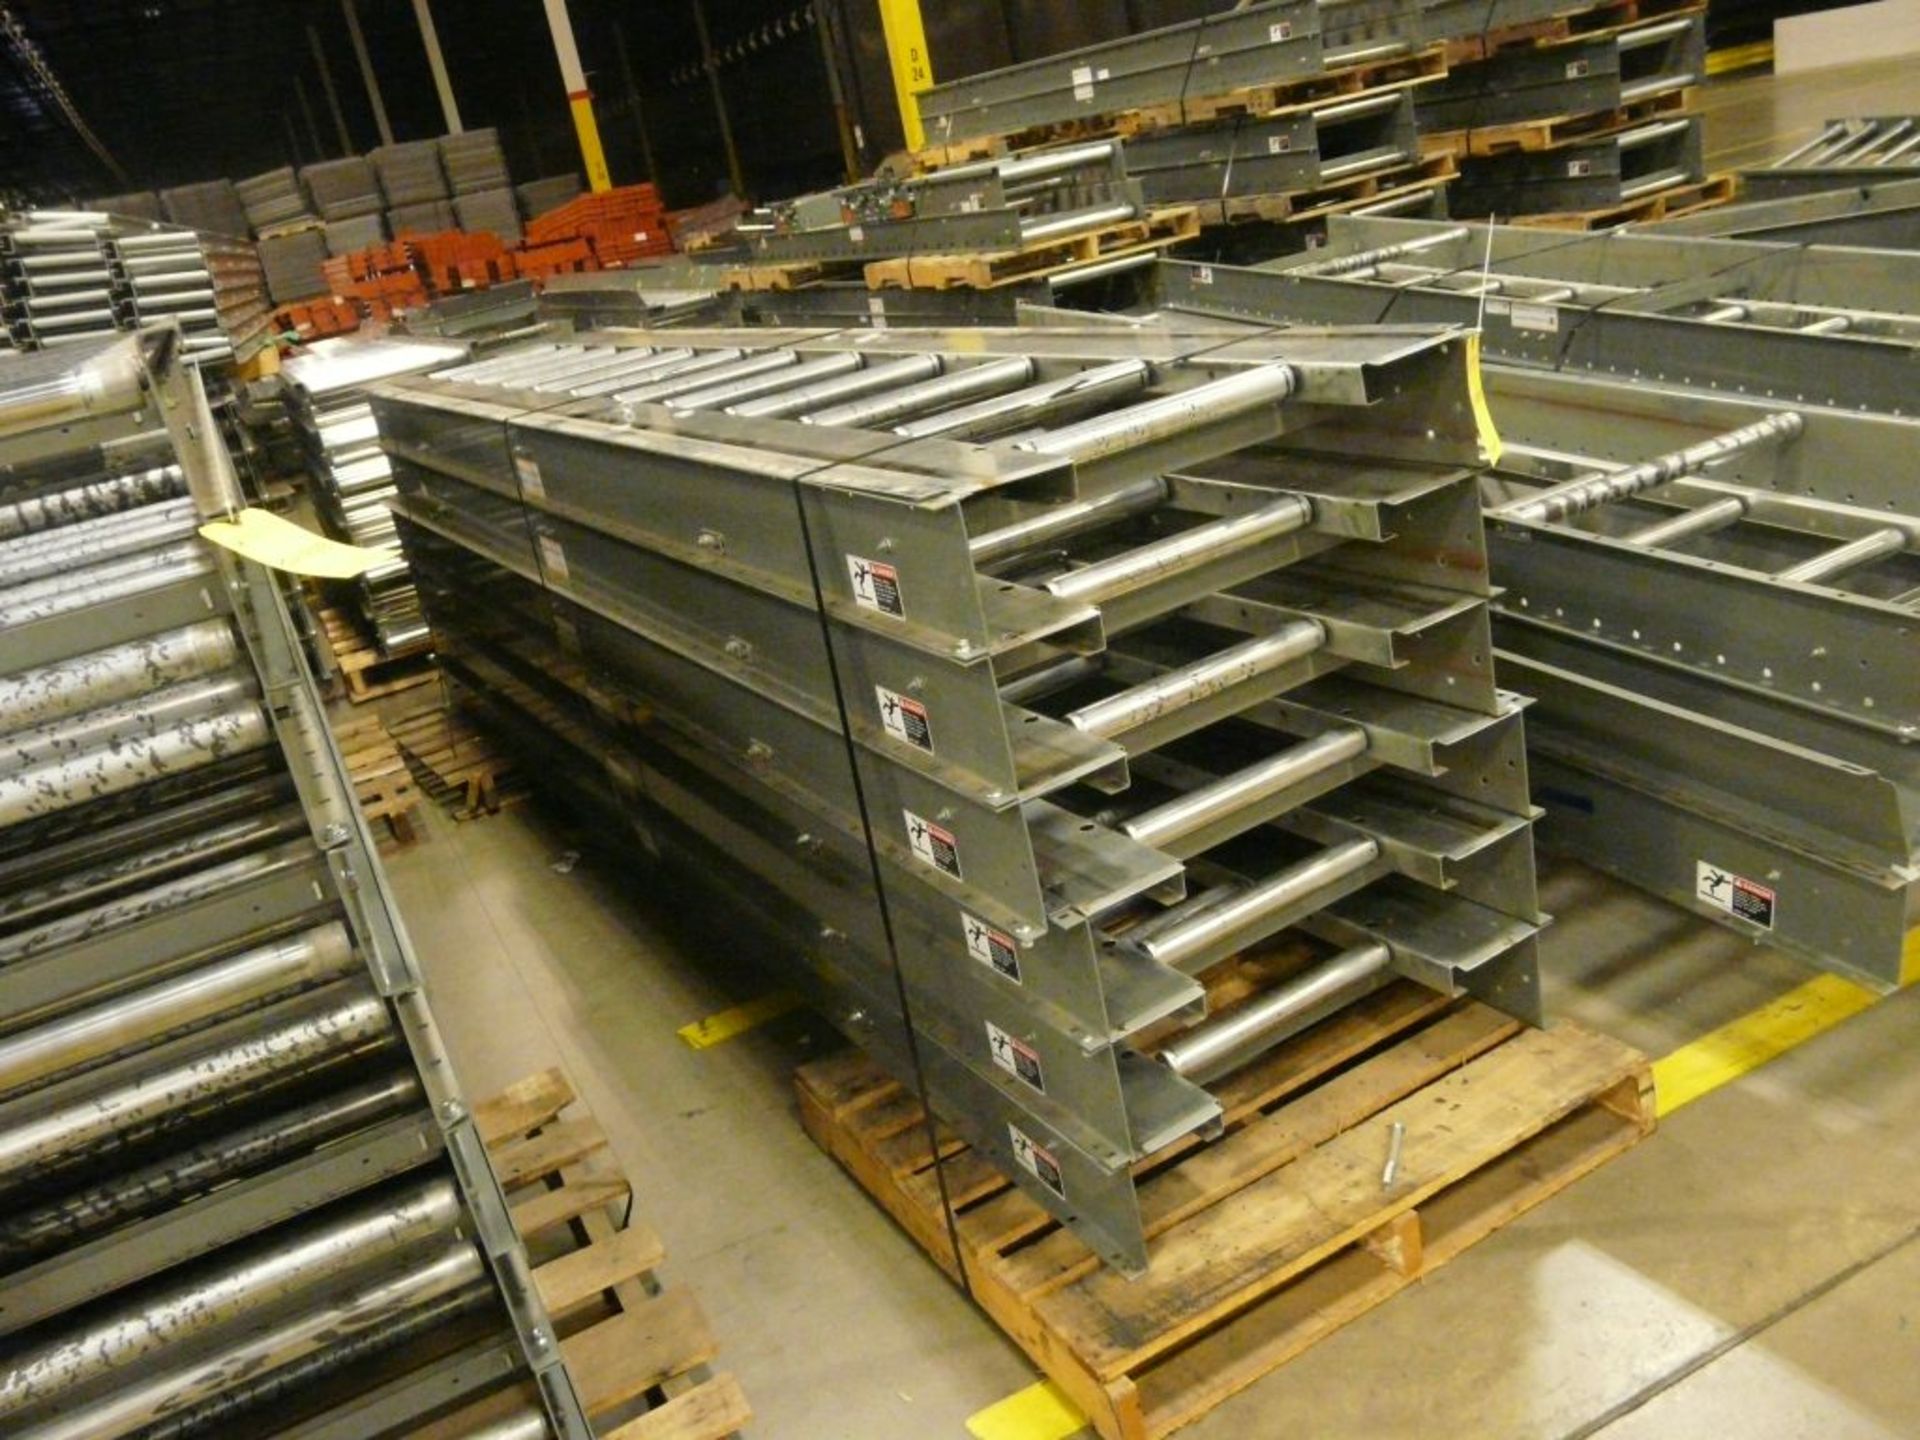 Lot of (45) 200 Belt Intermediate Conveyors - 12'L x 28"W; Tag: 223712 - $30 Lot Loading Fee - Image 2 of 4